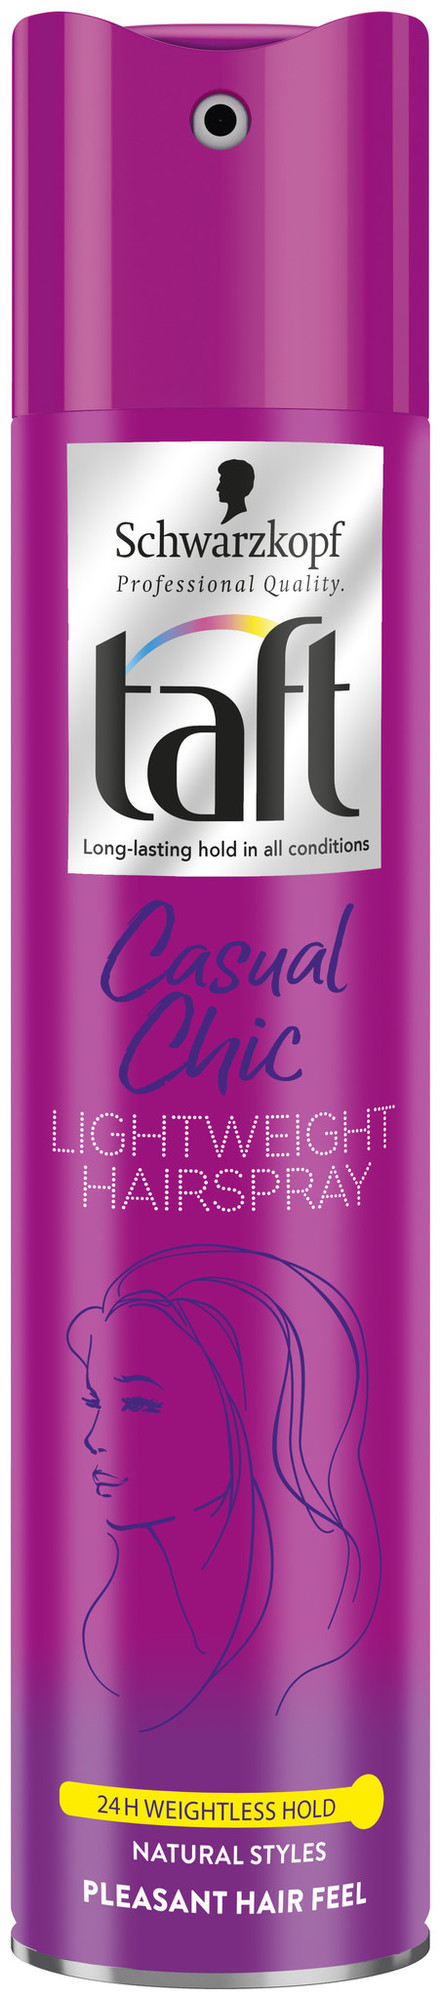 Taft Hairspray 250 ml Casual Chic